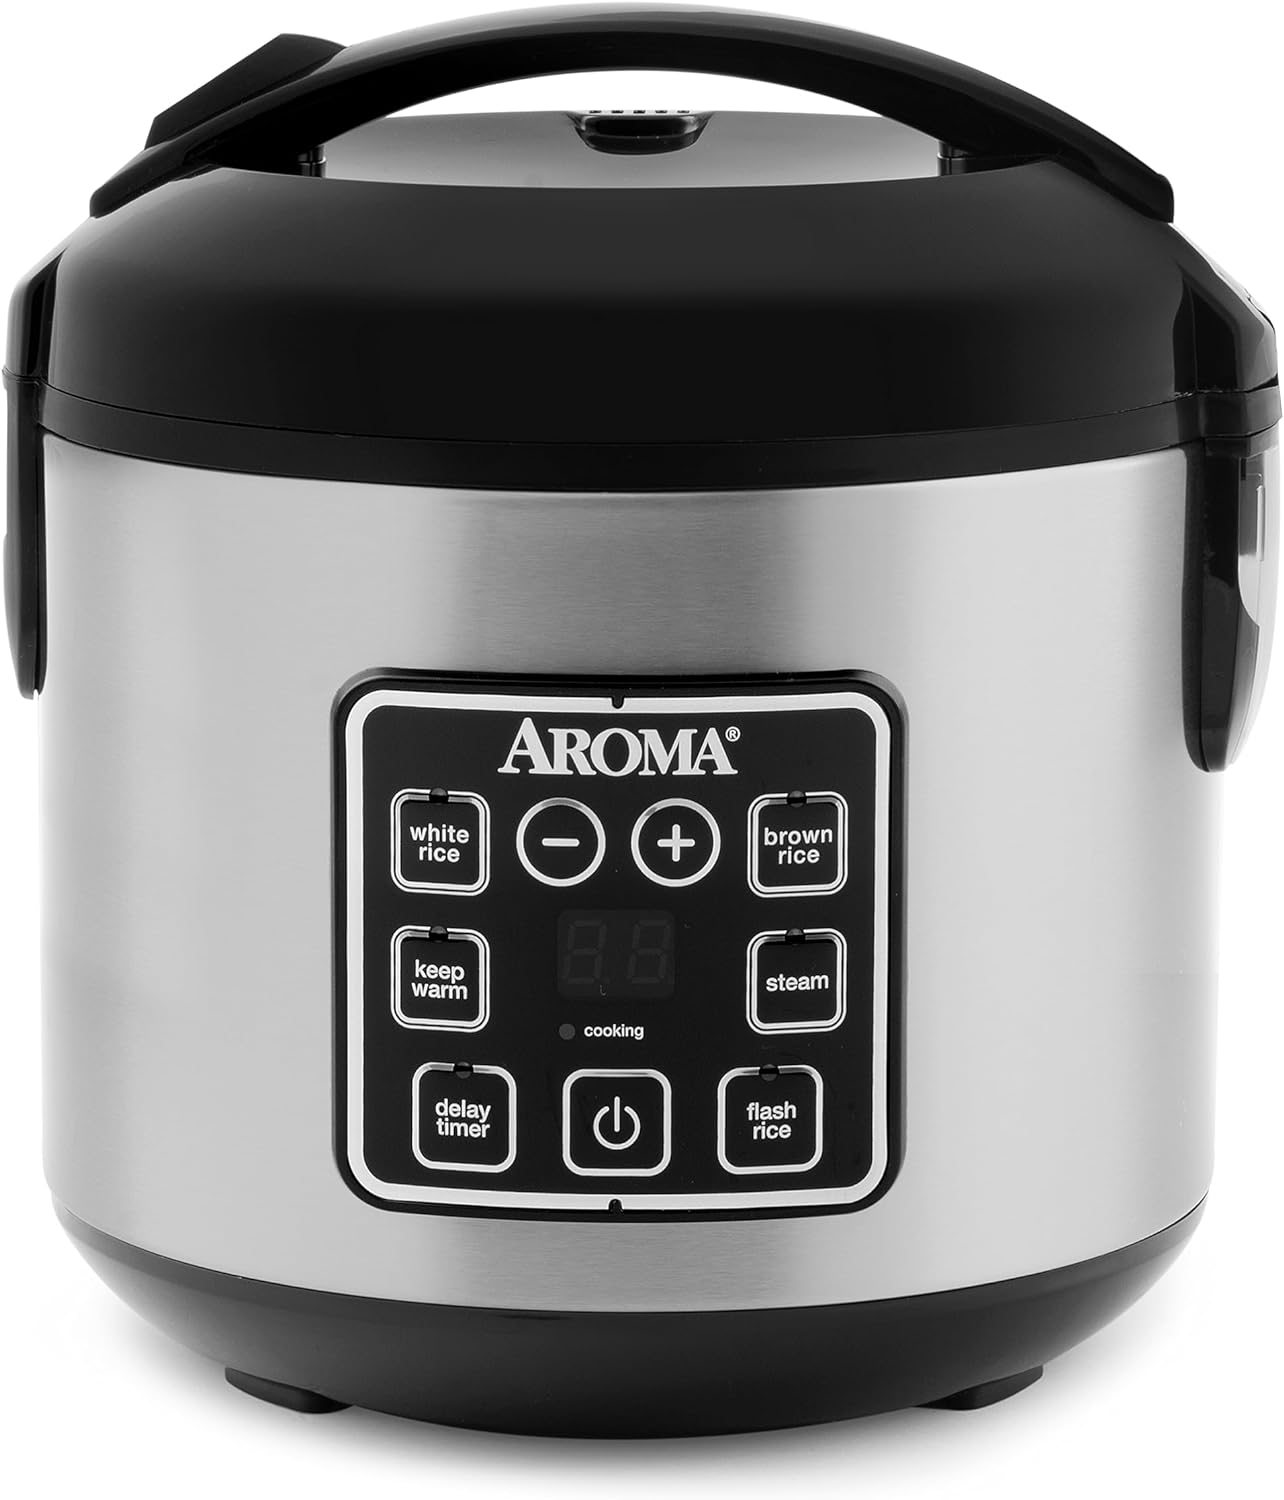 AROMA-Digital-Rice-Cooker